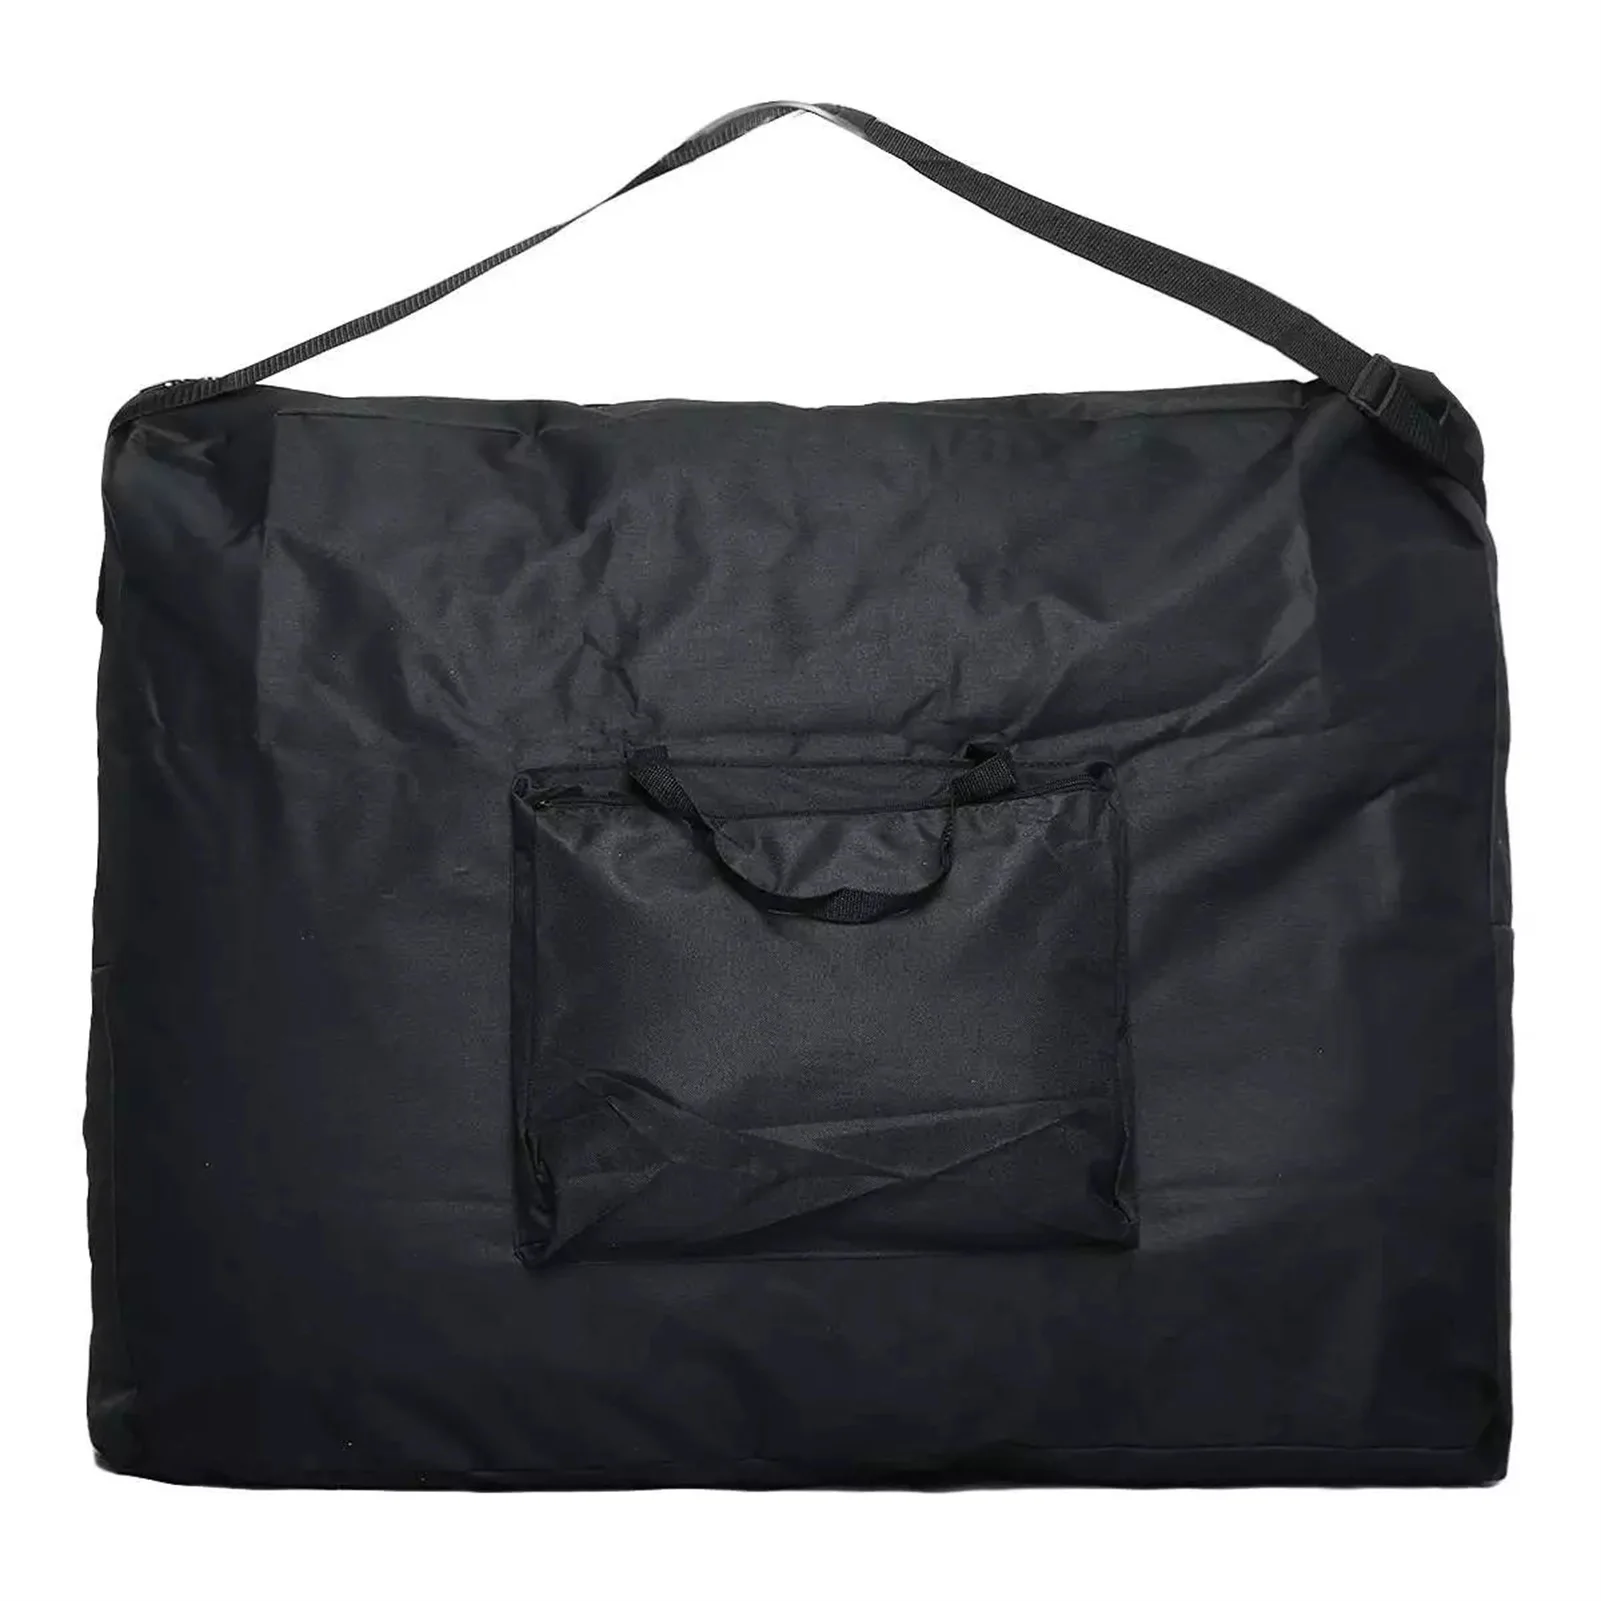 Black Handbag For Massage Table Carrying Bag For Nail Desk Beauty Bed Bag Oxford Cloth Folding Storage Carry Bag